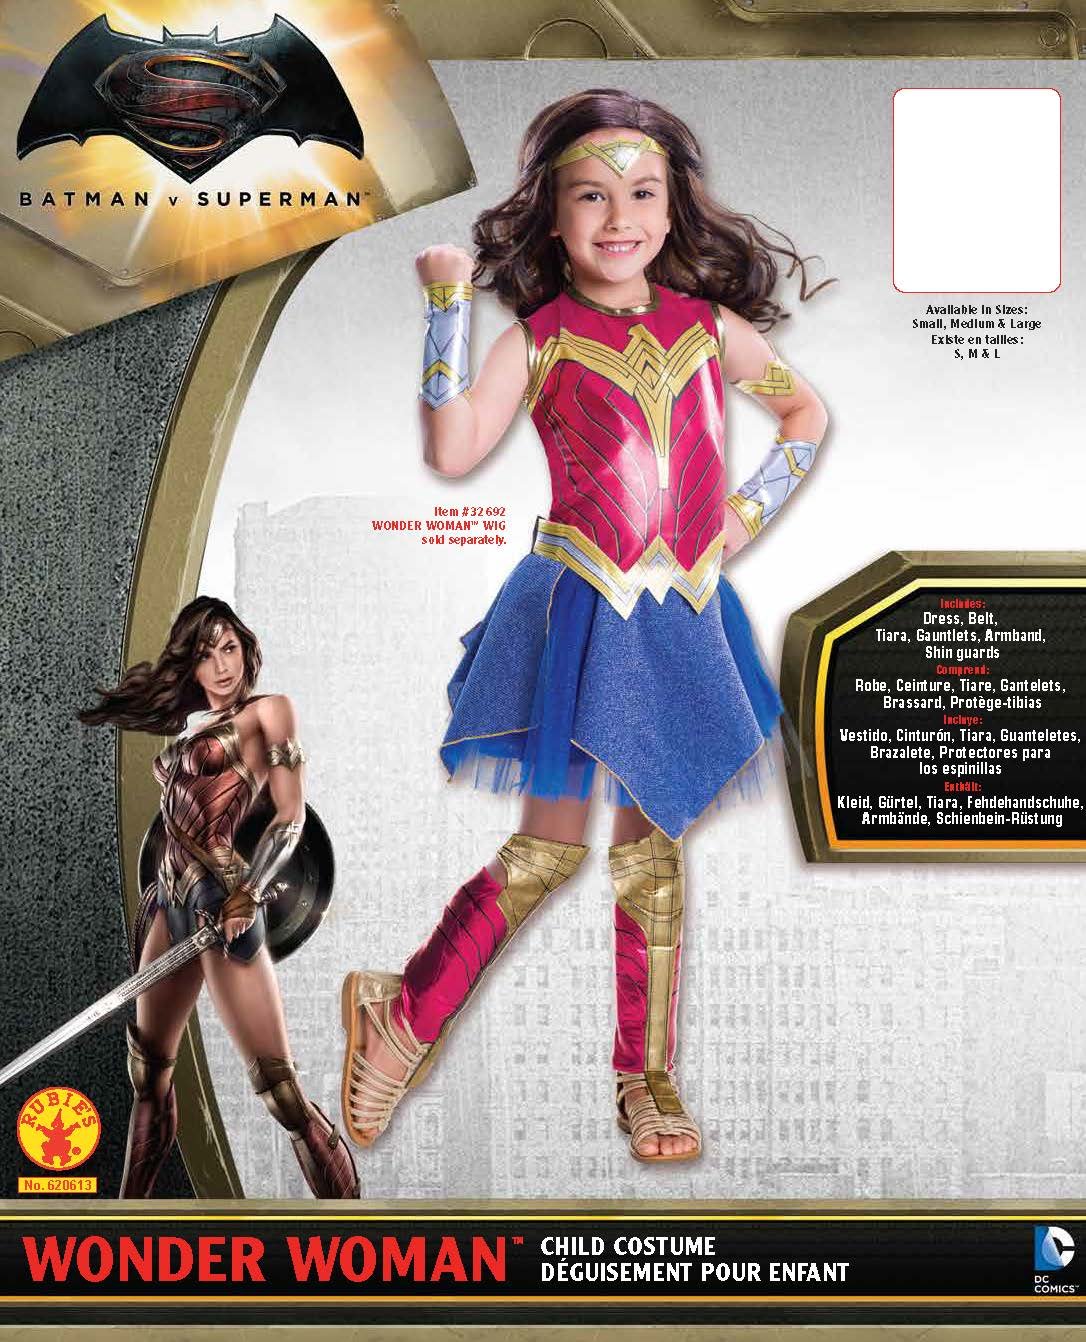 Rubie's Costume Batman vs Superman: Dawn of Justice Deluxe Wonder Woman Costume, Large